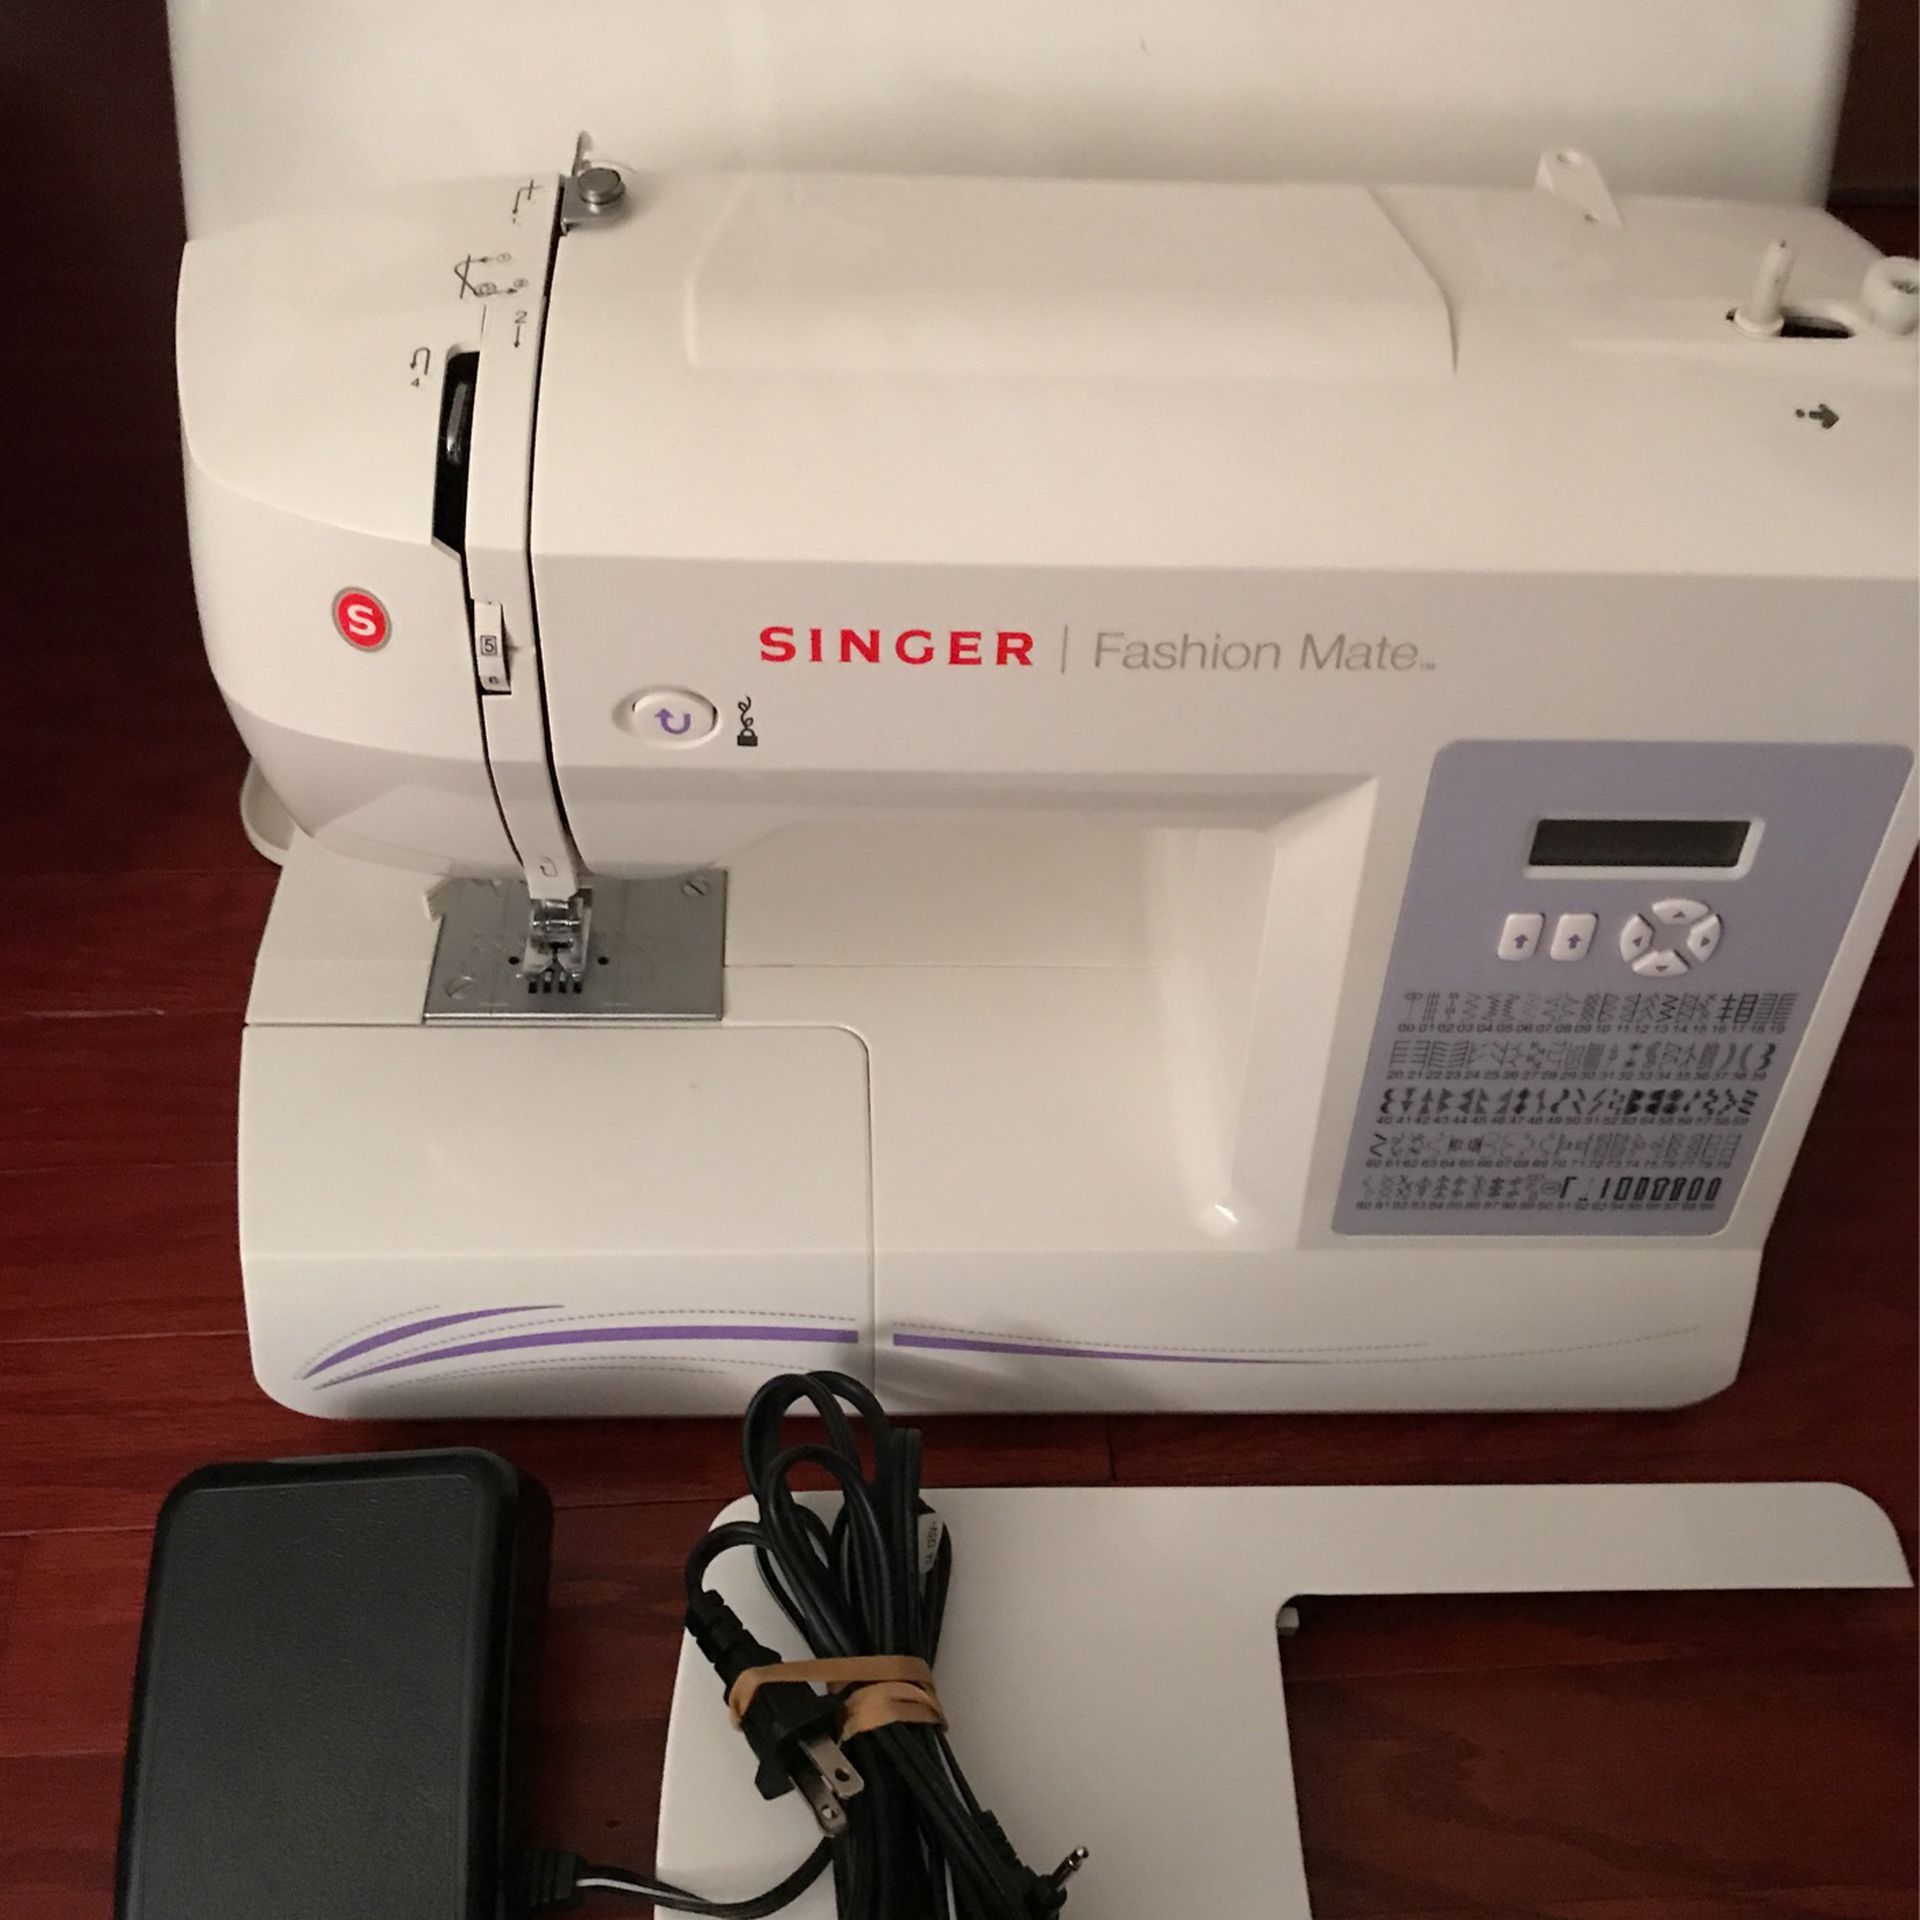 Singer 5500 Fashion Mate electric sewing machine 